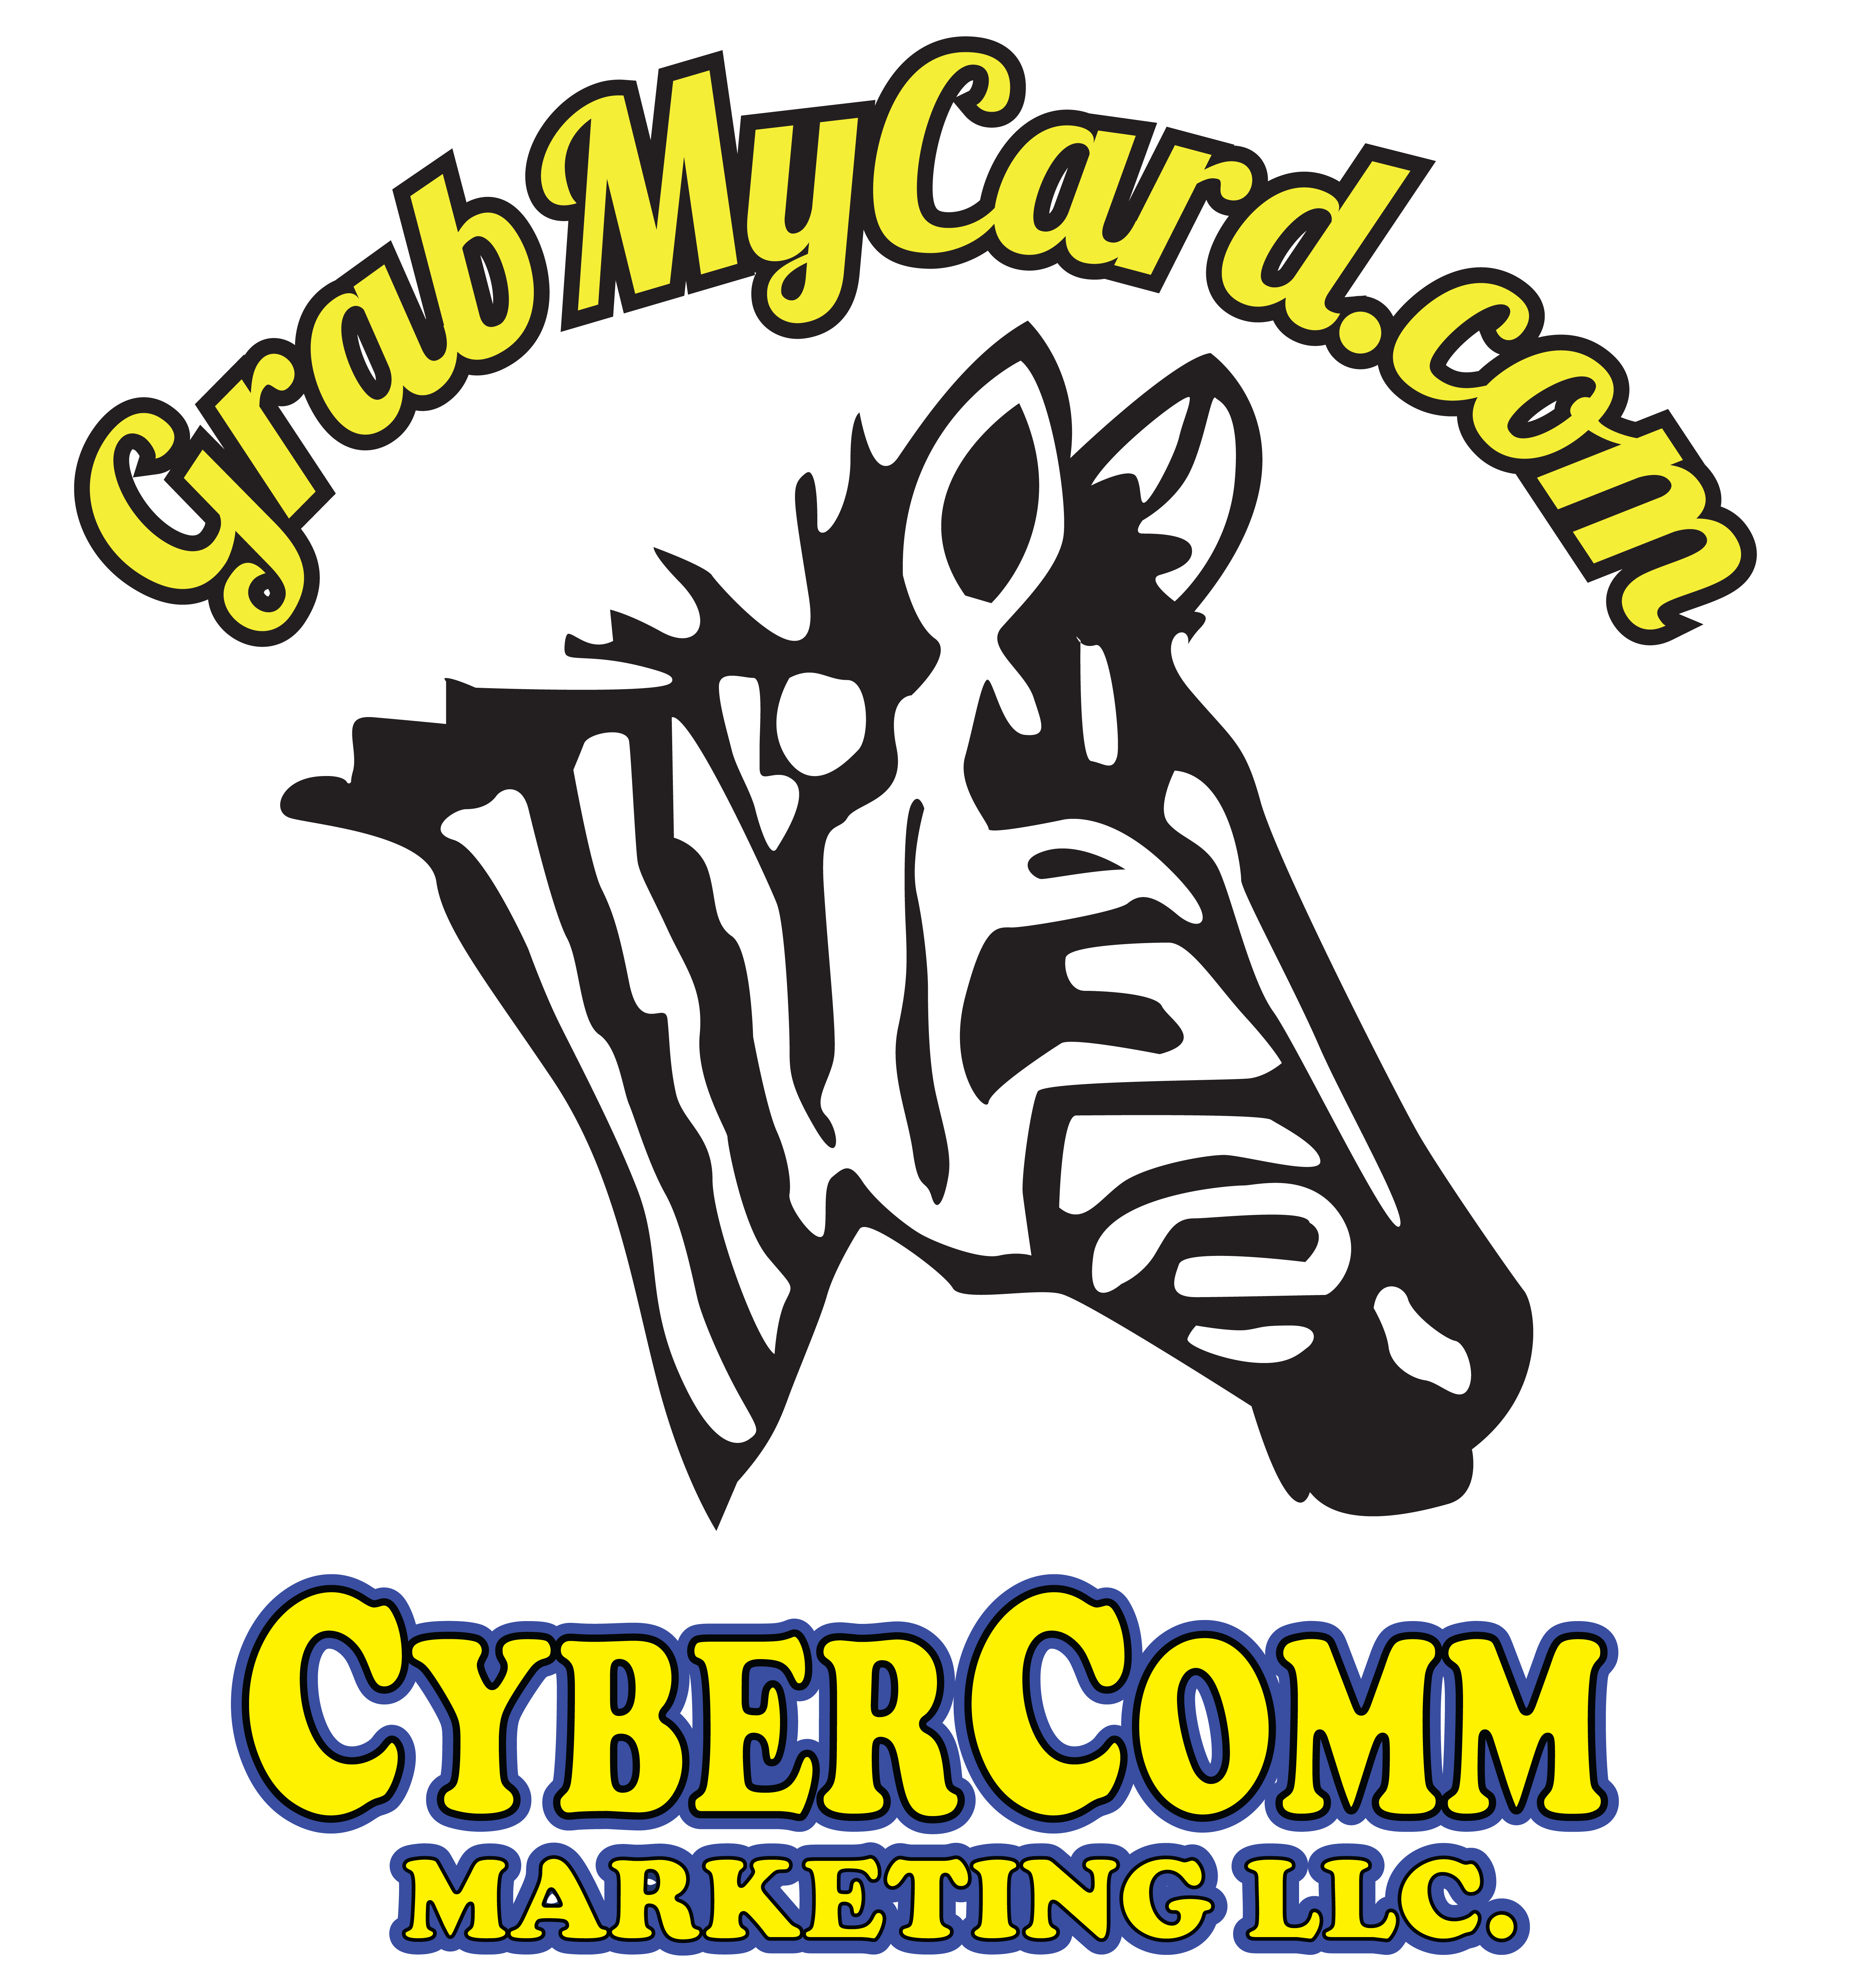 Jason Sykes Business Card from CyberComm Marketing, LLC